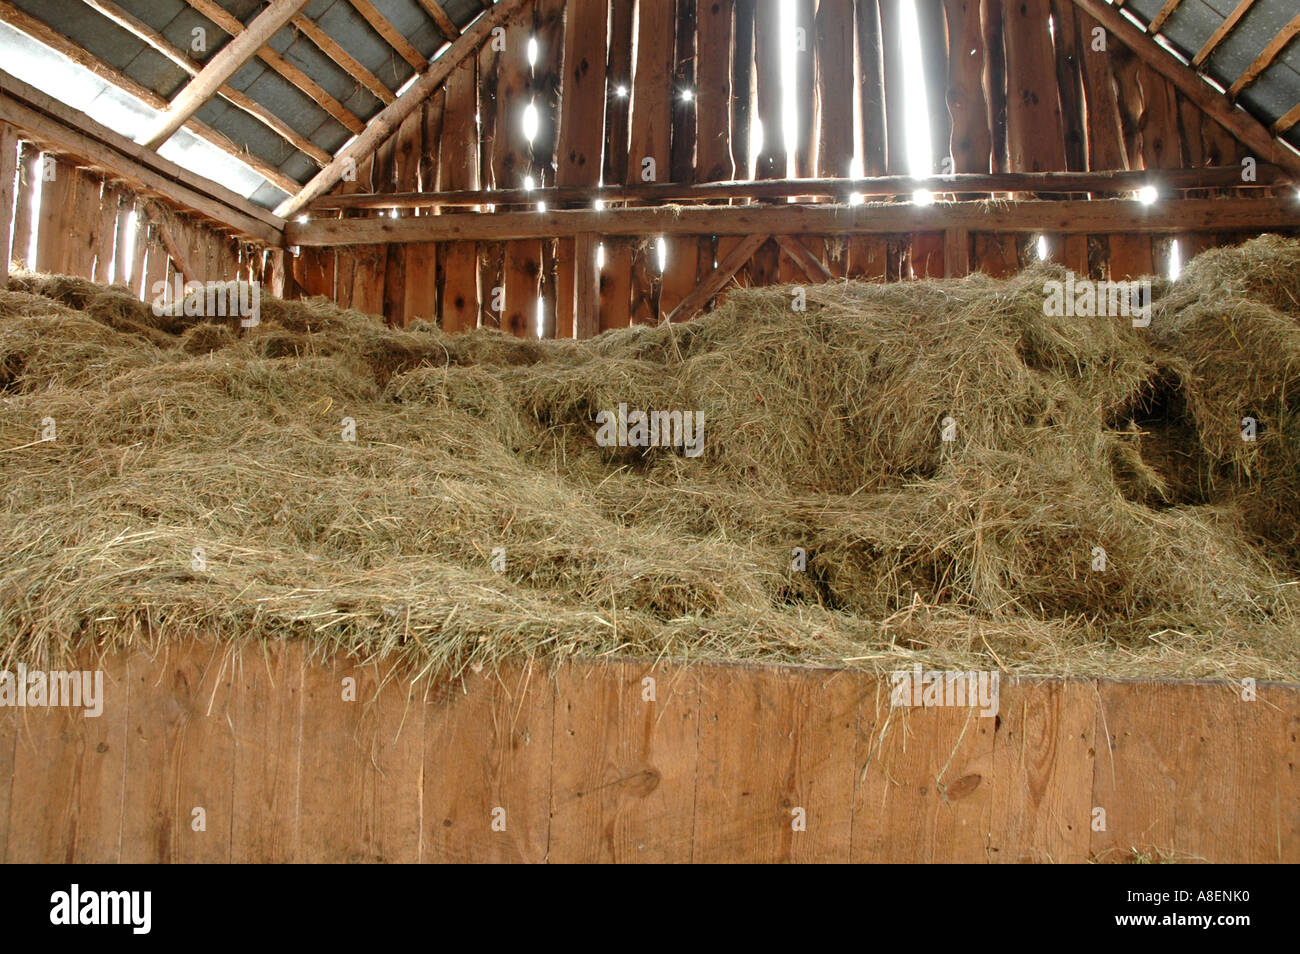 Hay Inside The Barn